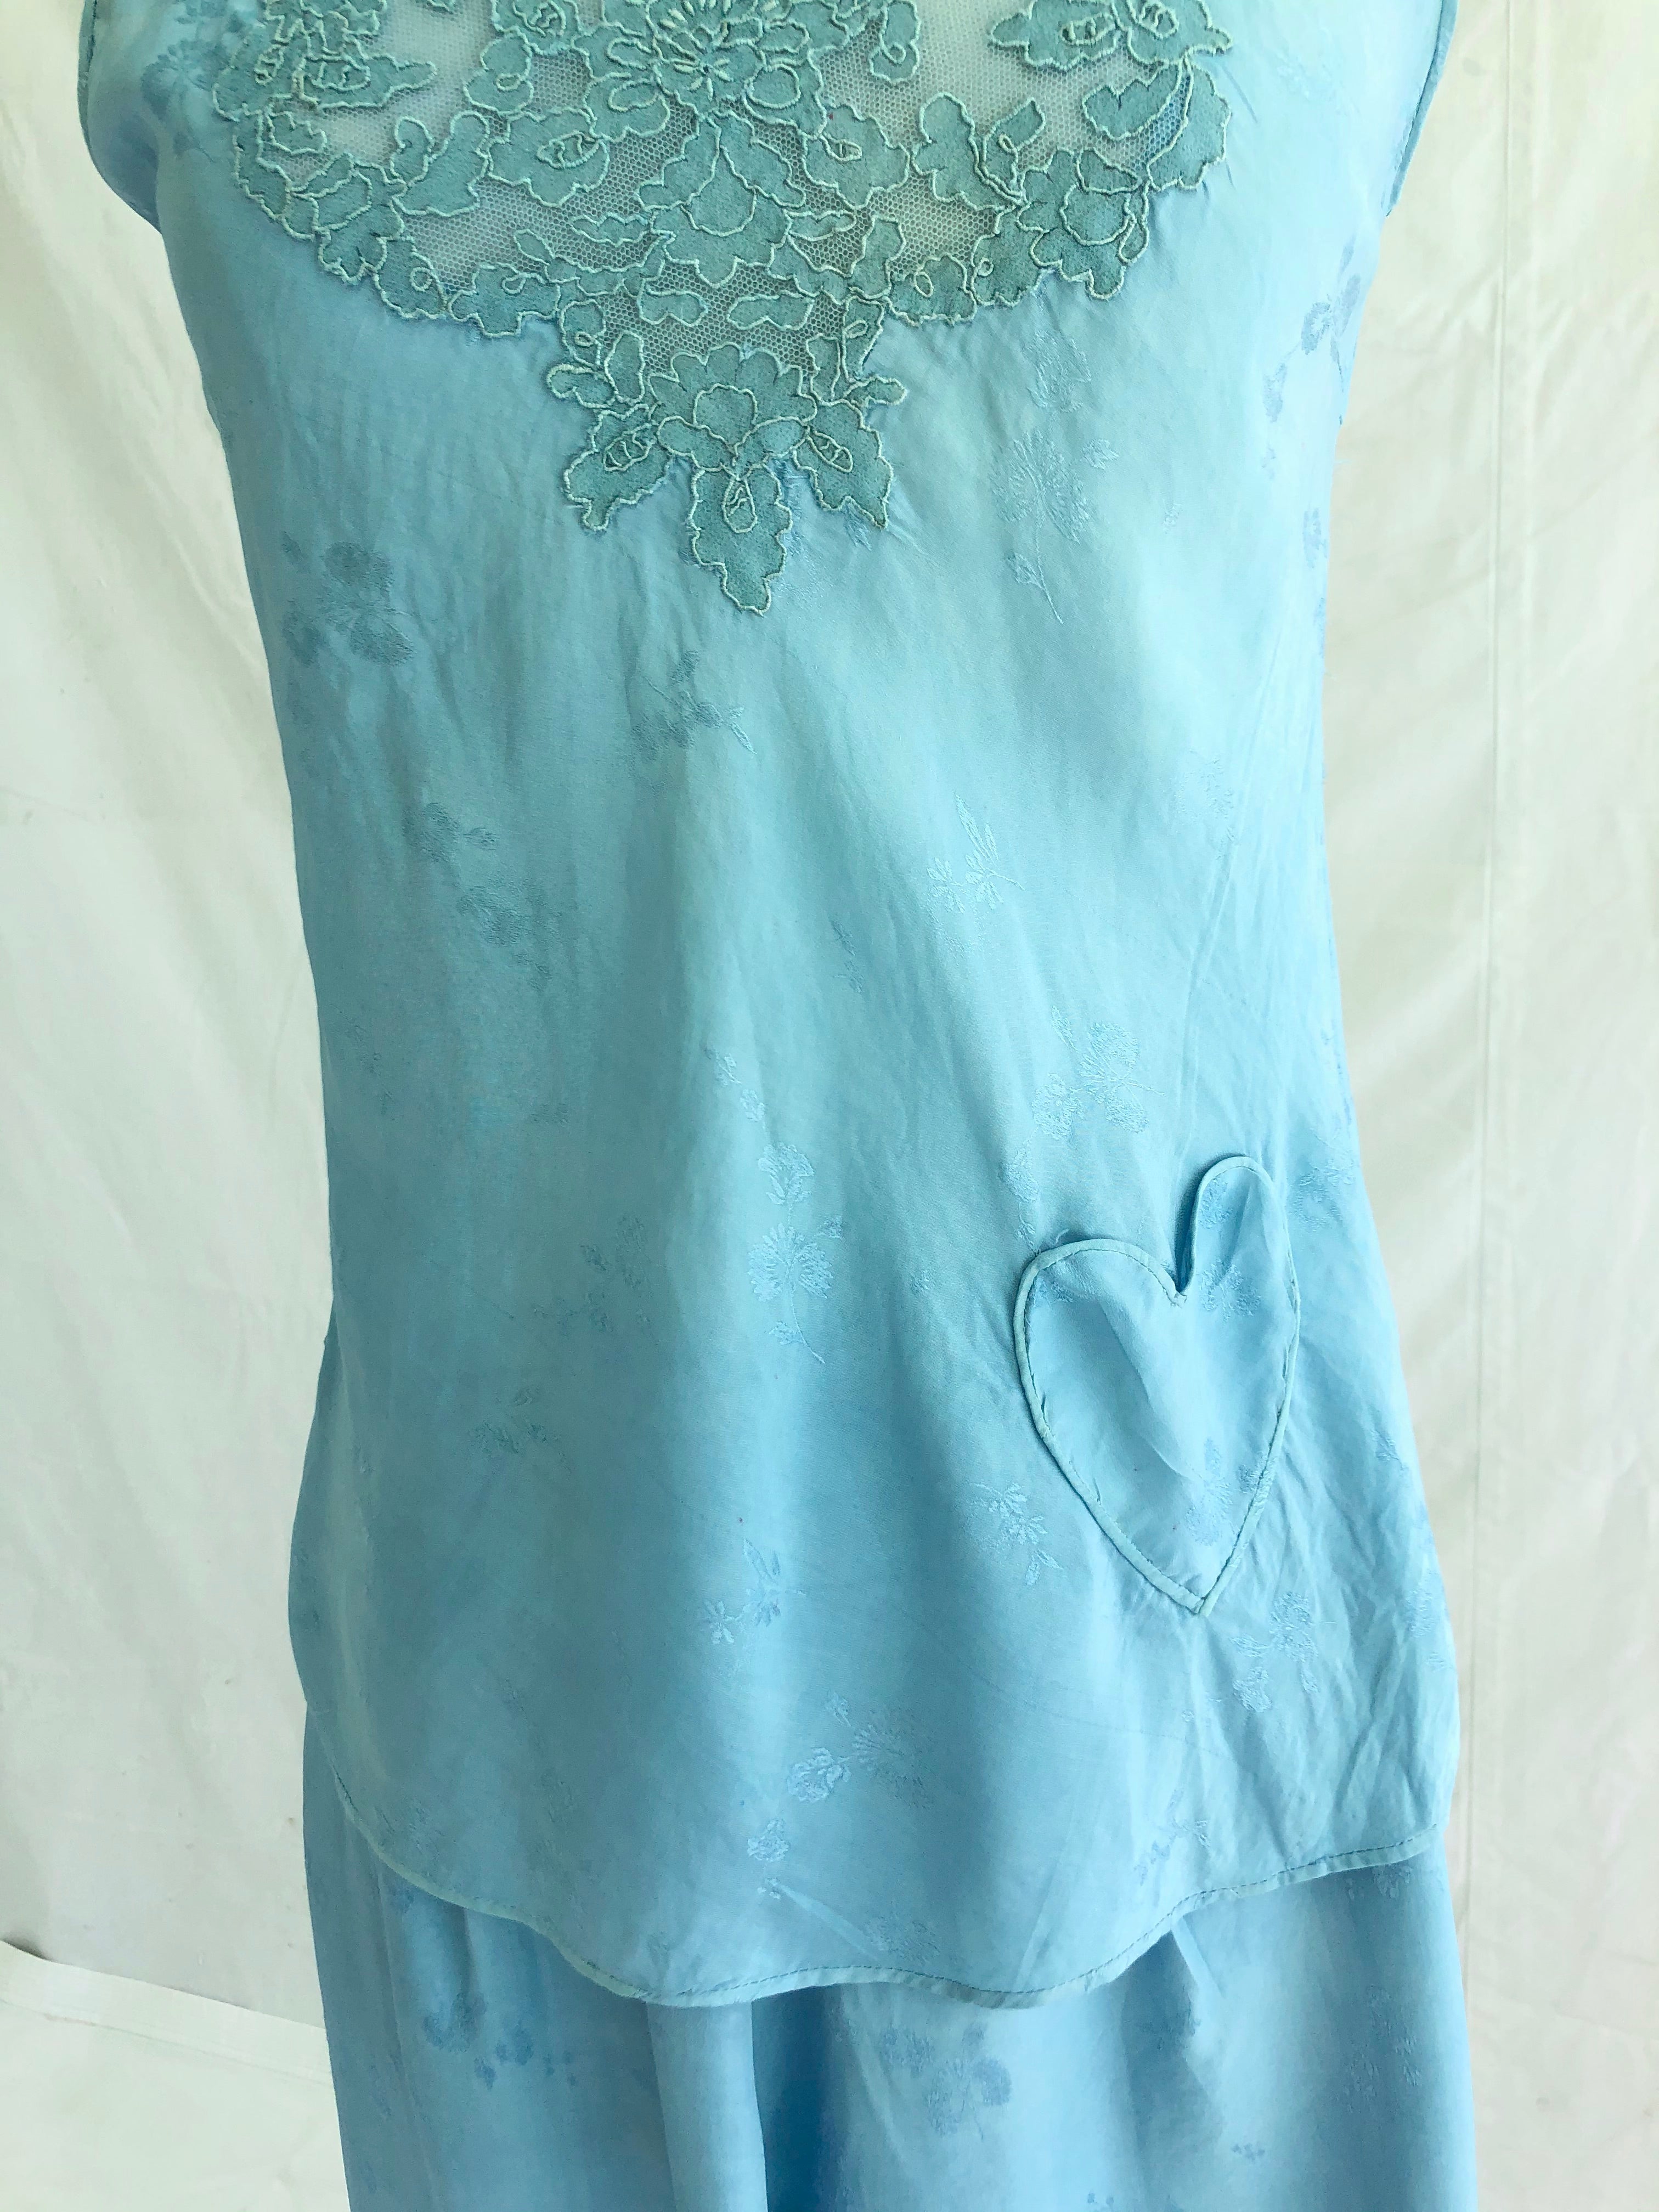 1950's Sky Blue Silk Pajama 2-Piece Set with Heart Pocket